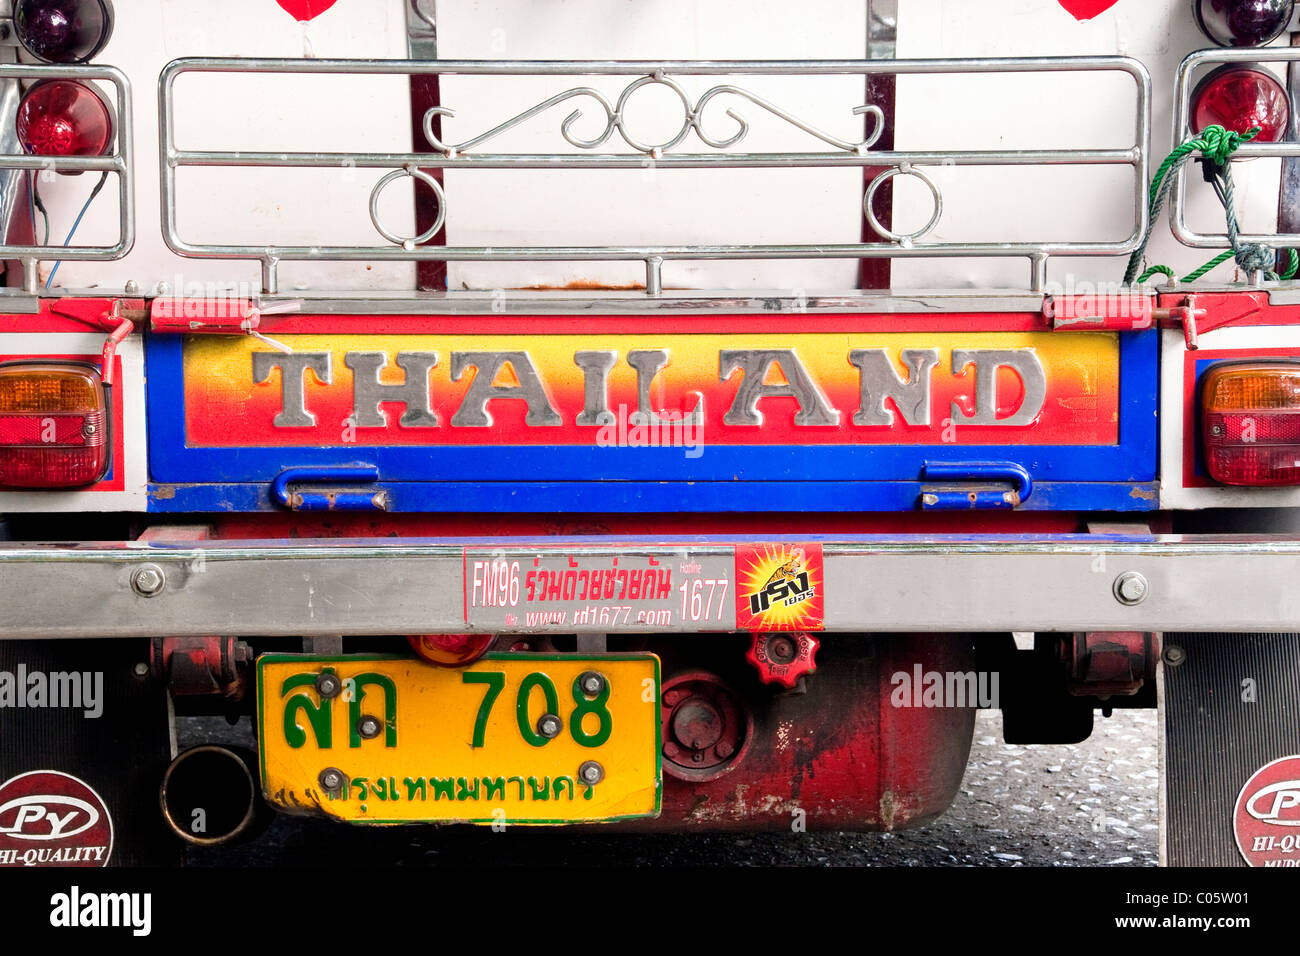 Tuk Tuk (traditional taxi) back panel with traditional 'Thailand' logo, Bangkok, Thailand Stock Photo